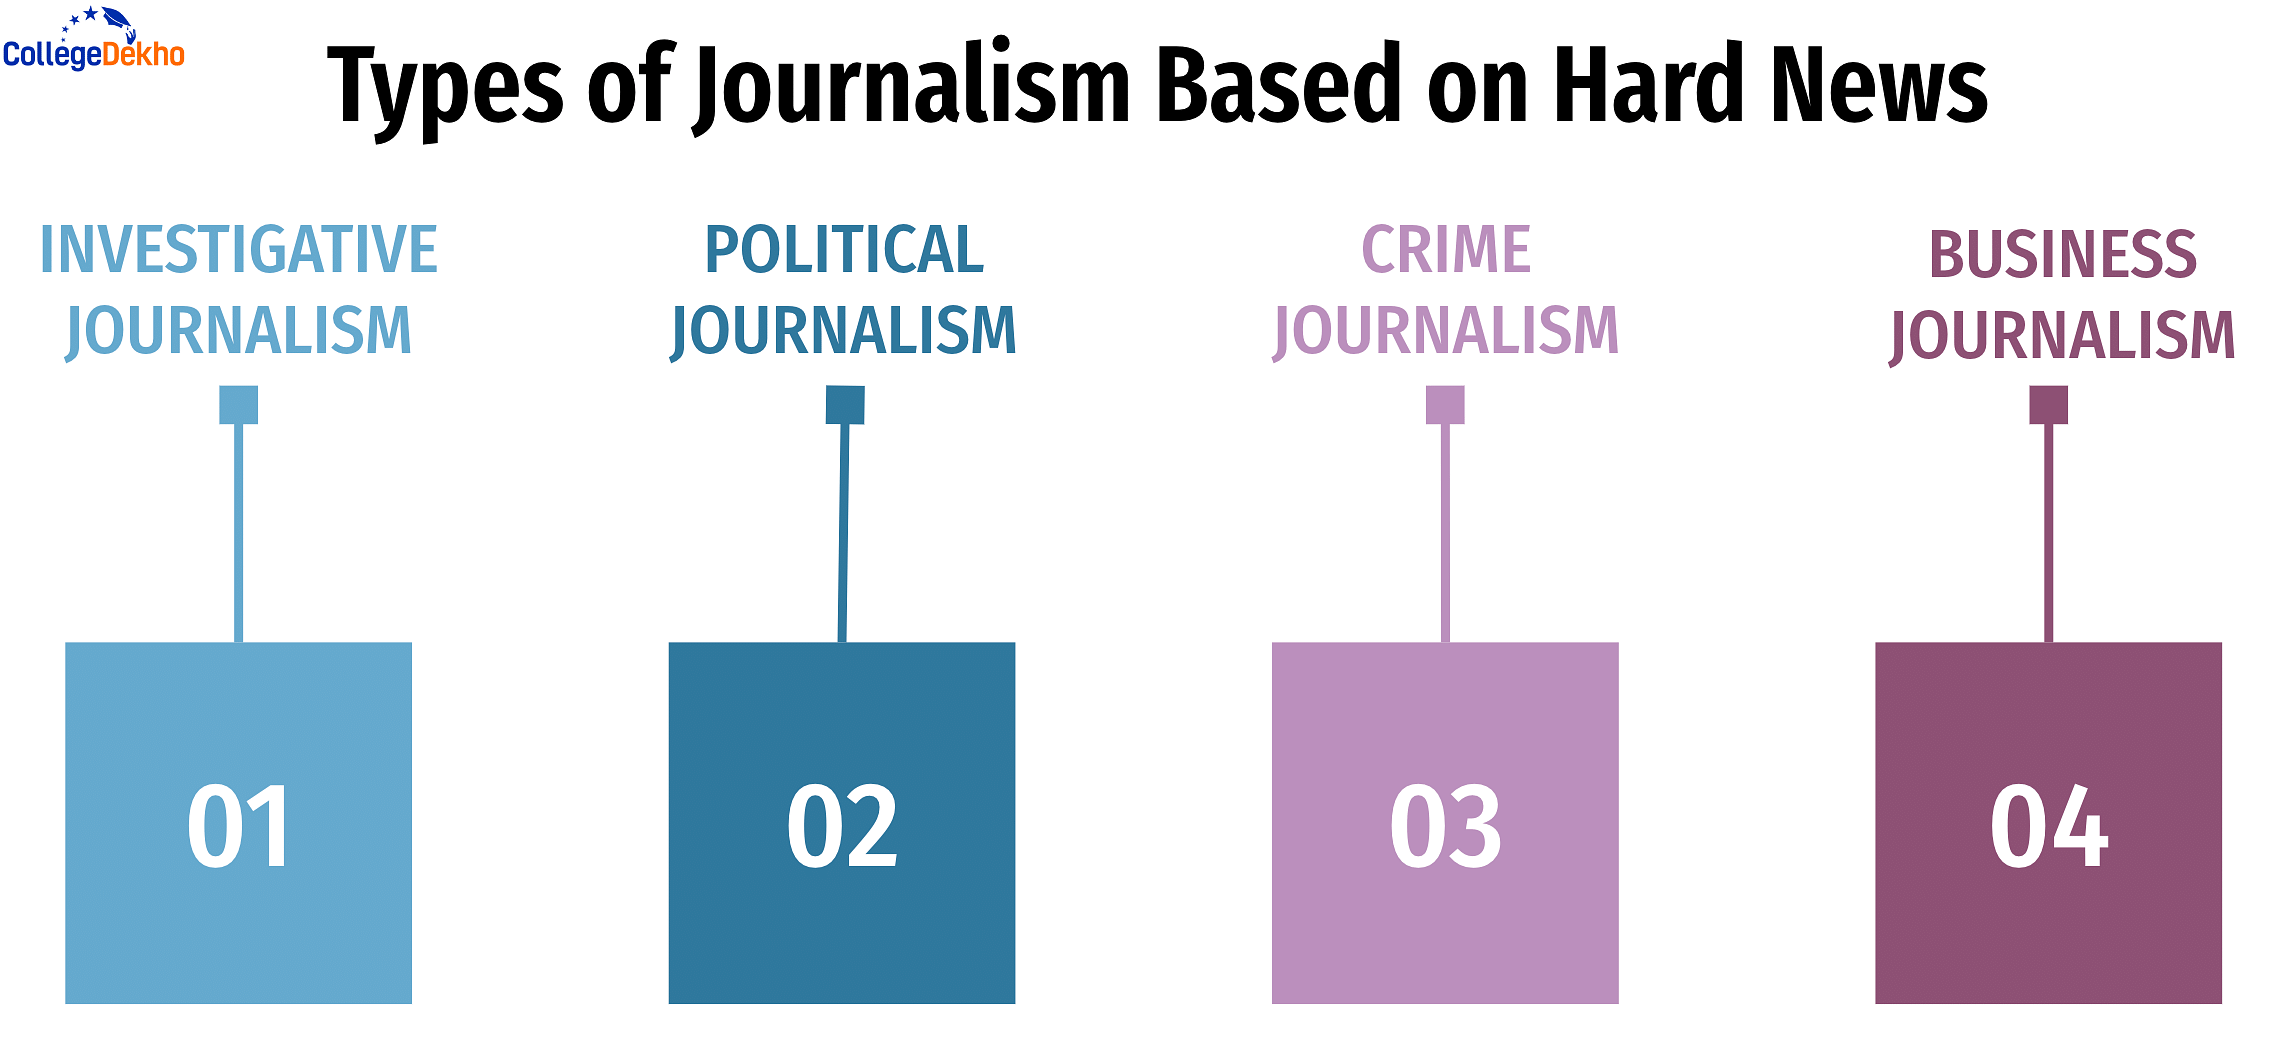 Types of Journalism Based on Hard News